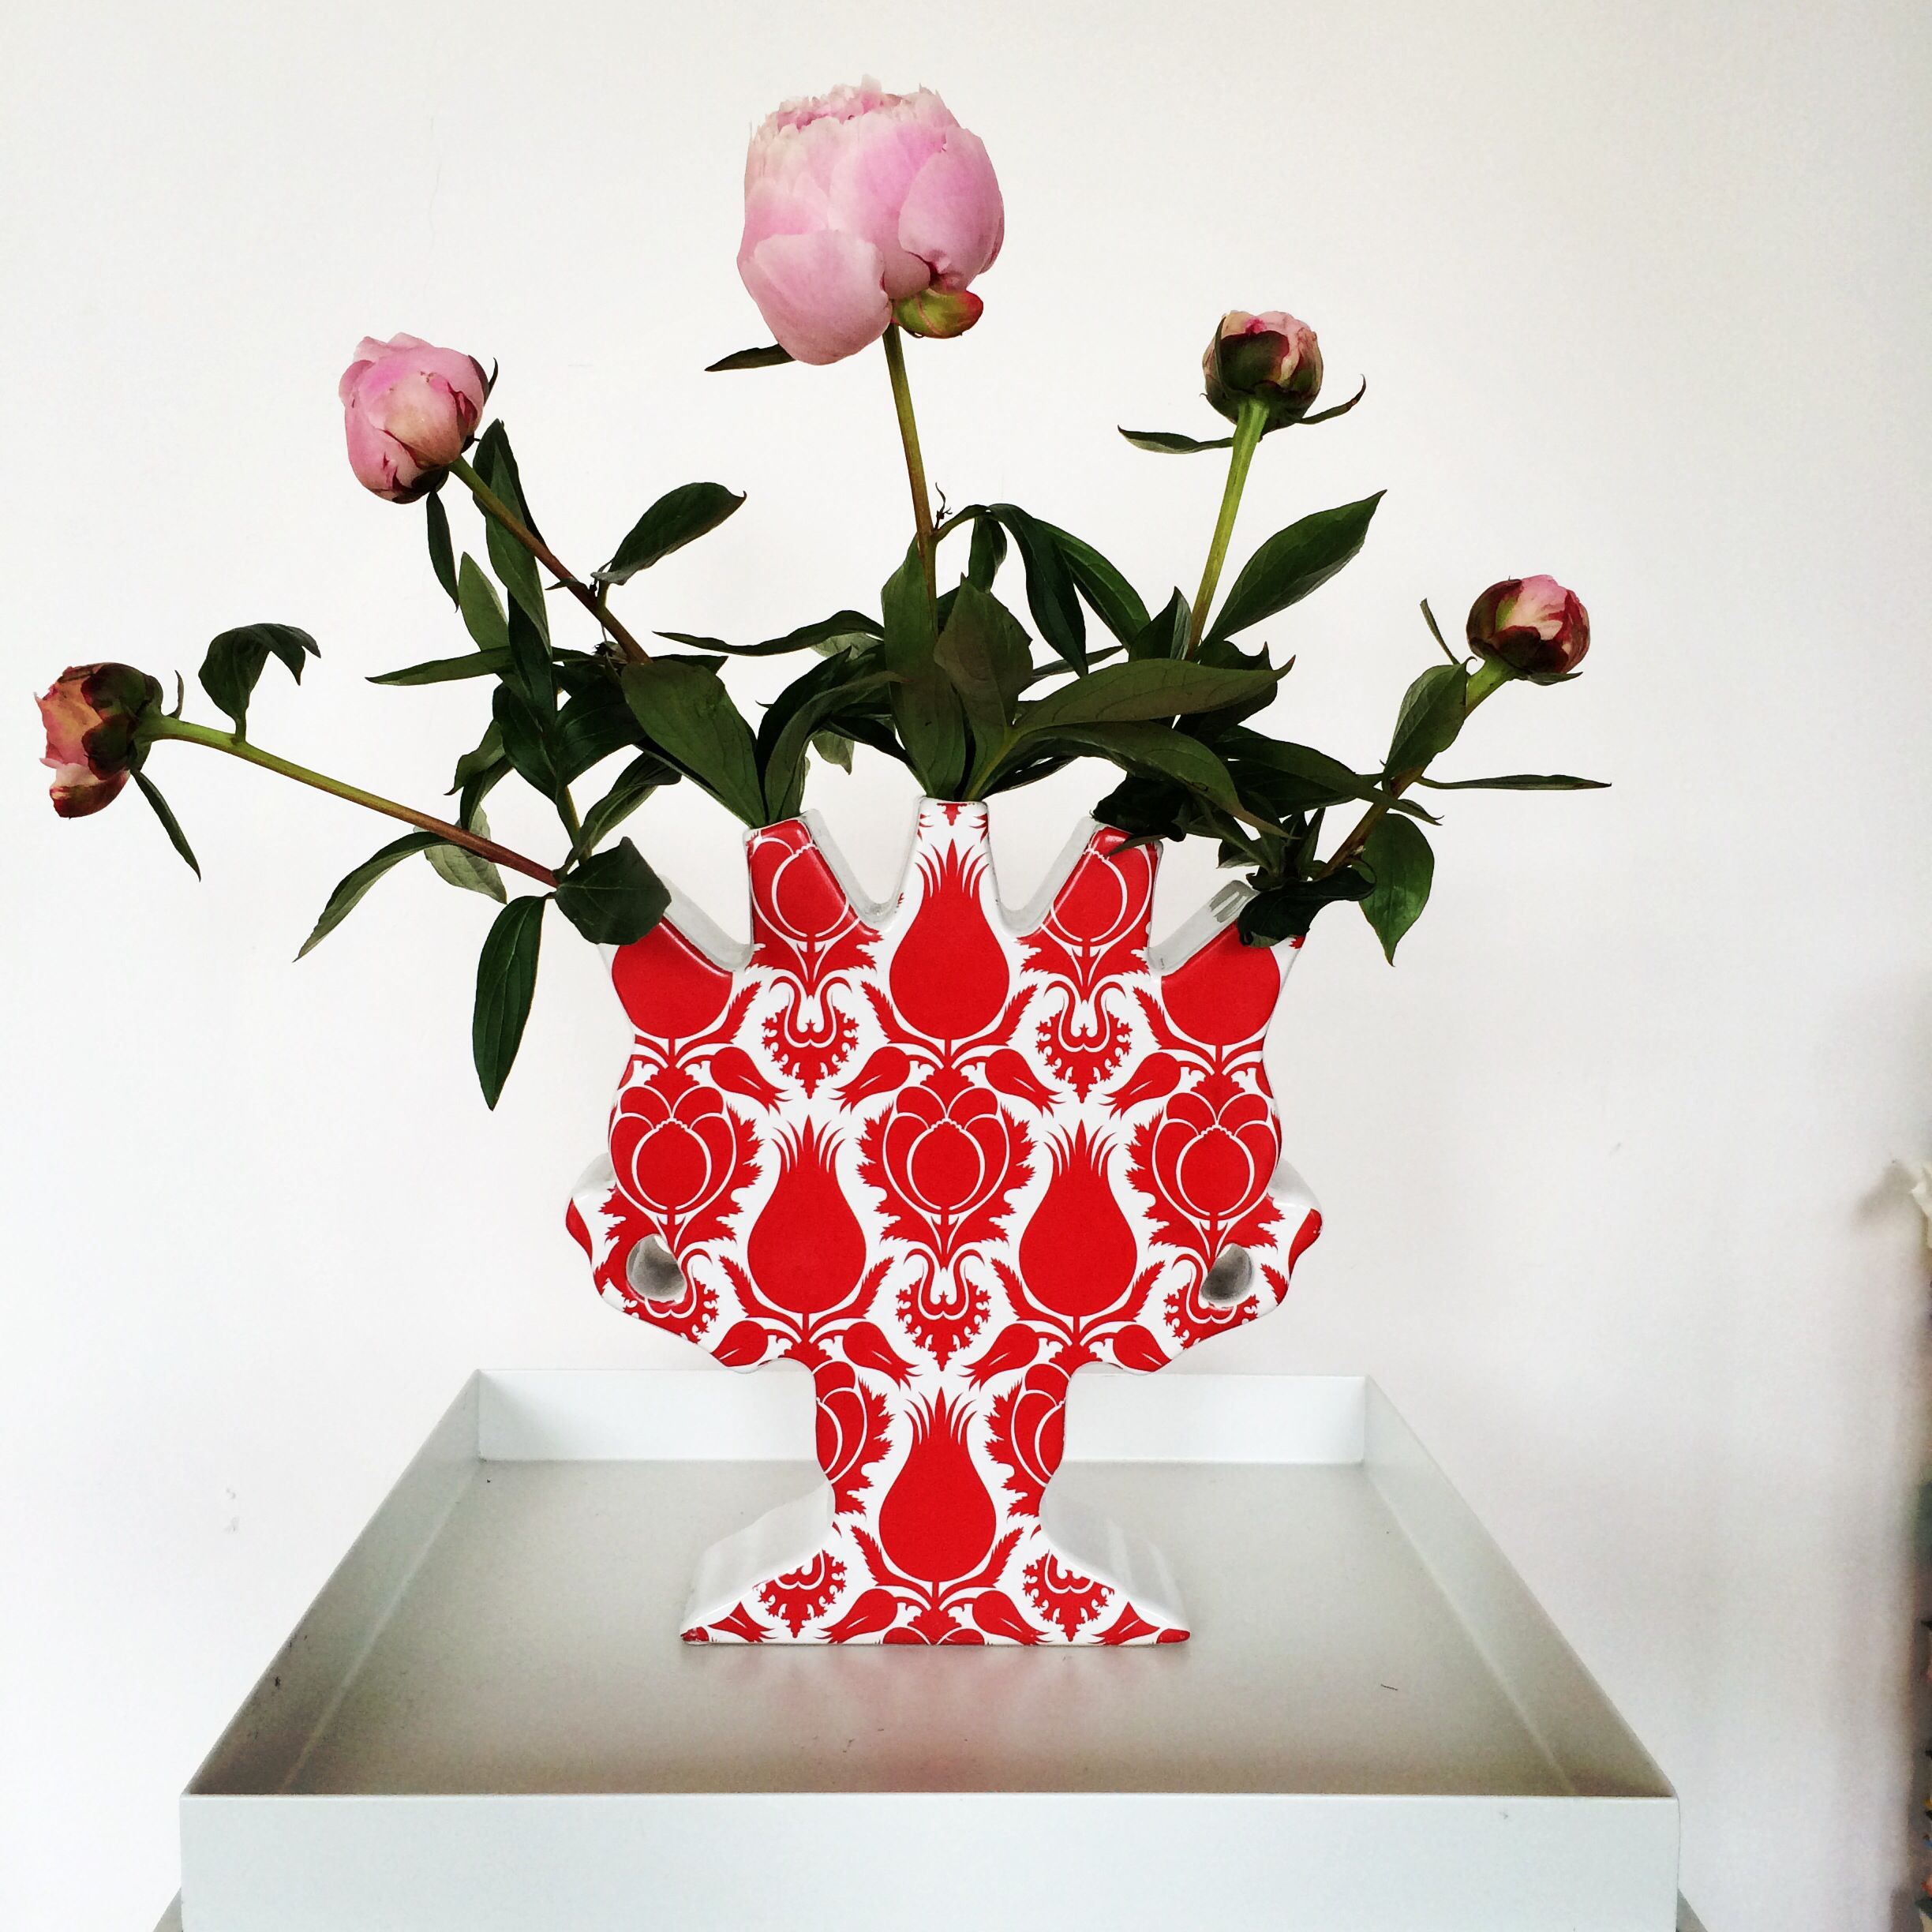 10 Wonderful Tulip Vase Ideas 2024 free download tulip vase ideas of lotte van laatum tulip vase with peonies collection on tables regarding lotte van laatum tulip vase with peonies